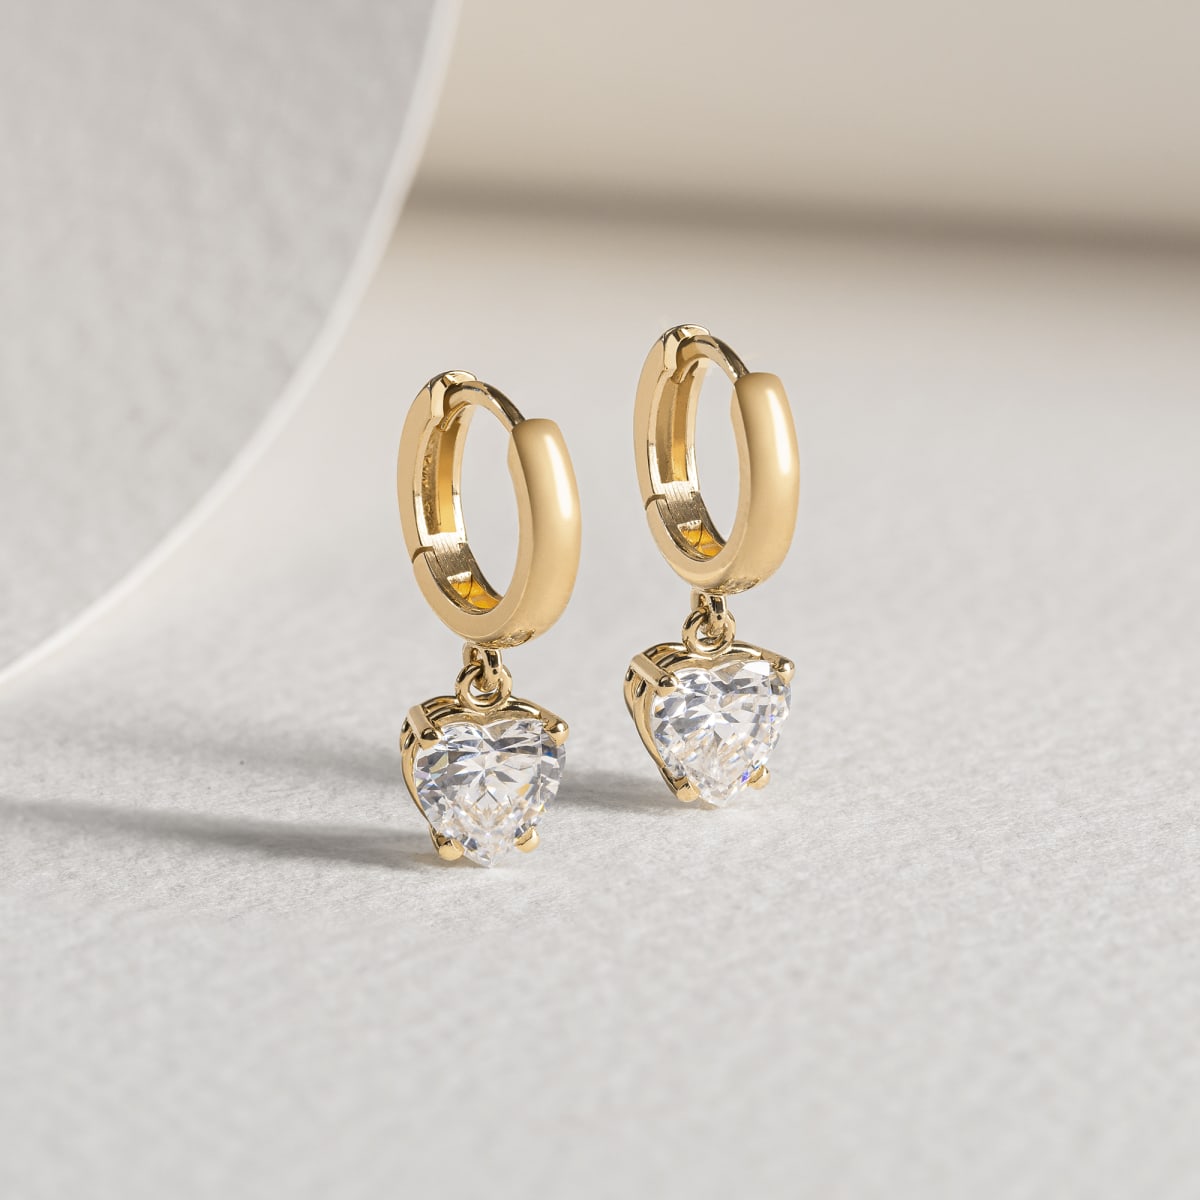 Solitaire Drop Earrings With 2.00 Cttw Heart Centers DEW, 14K Yellow Gold, Nexus Diamond Alternative